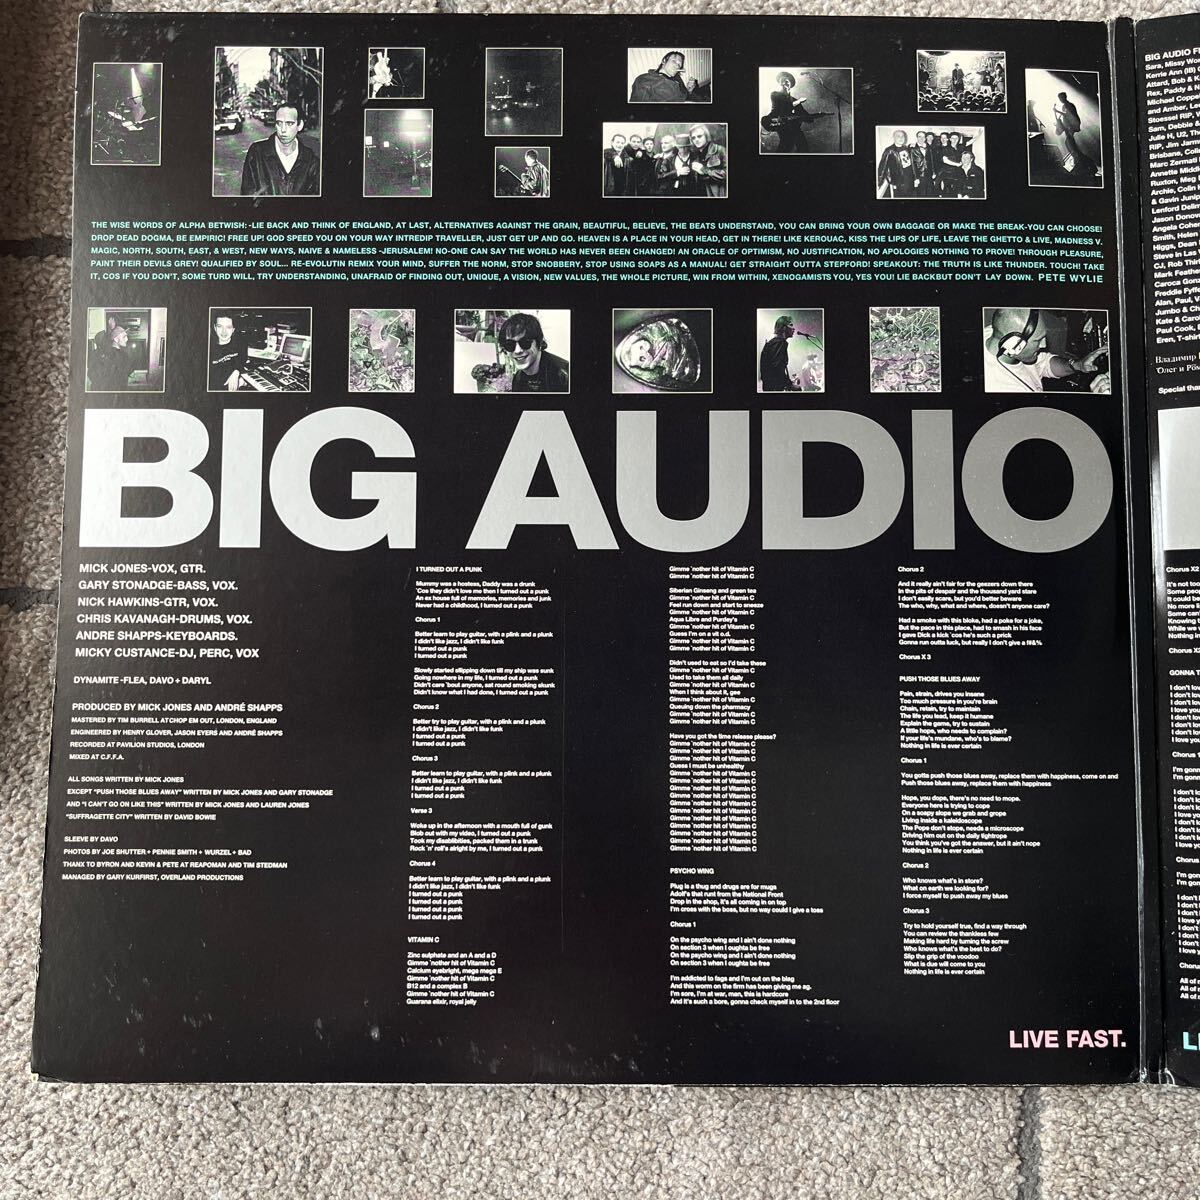 BIG AUDIO DYNAMITE / F-PUNK RADIOACTIVE 2LP Vinyl record CLASH MICK JONES DON LETS London punk Newwave 80’s US盤 _画像4